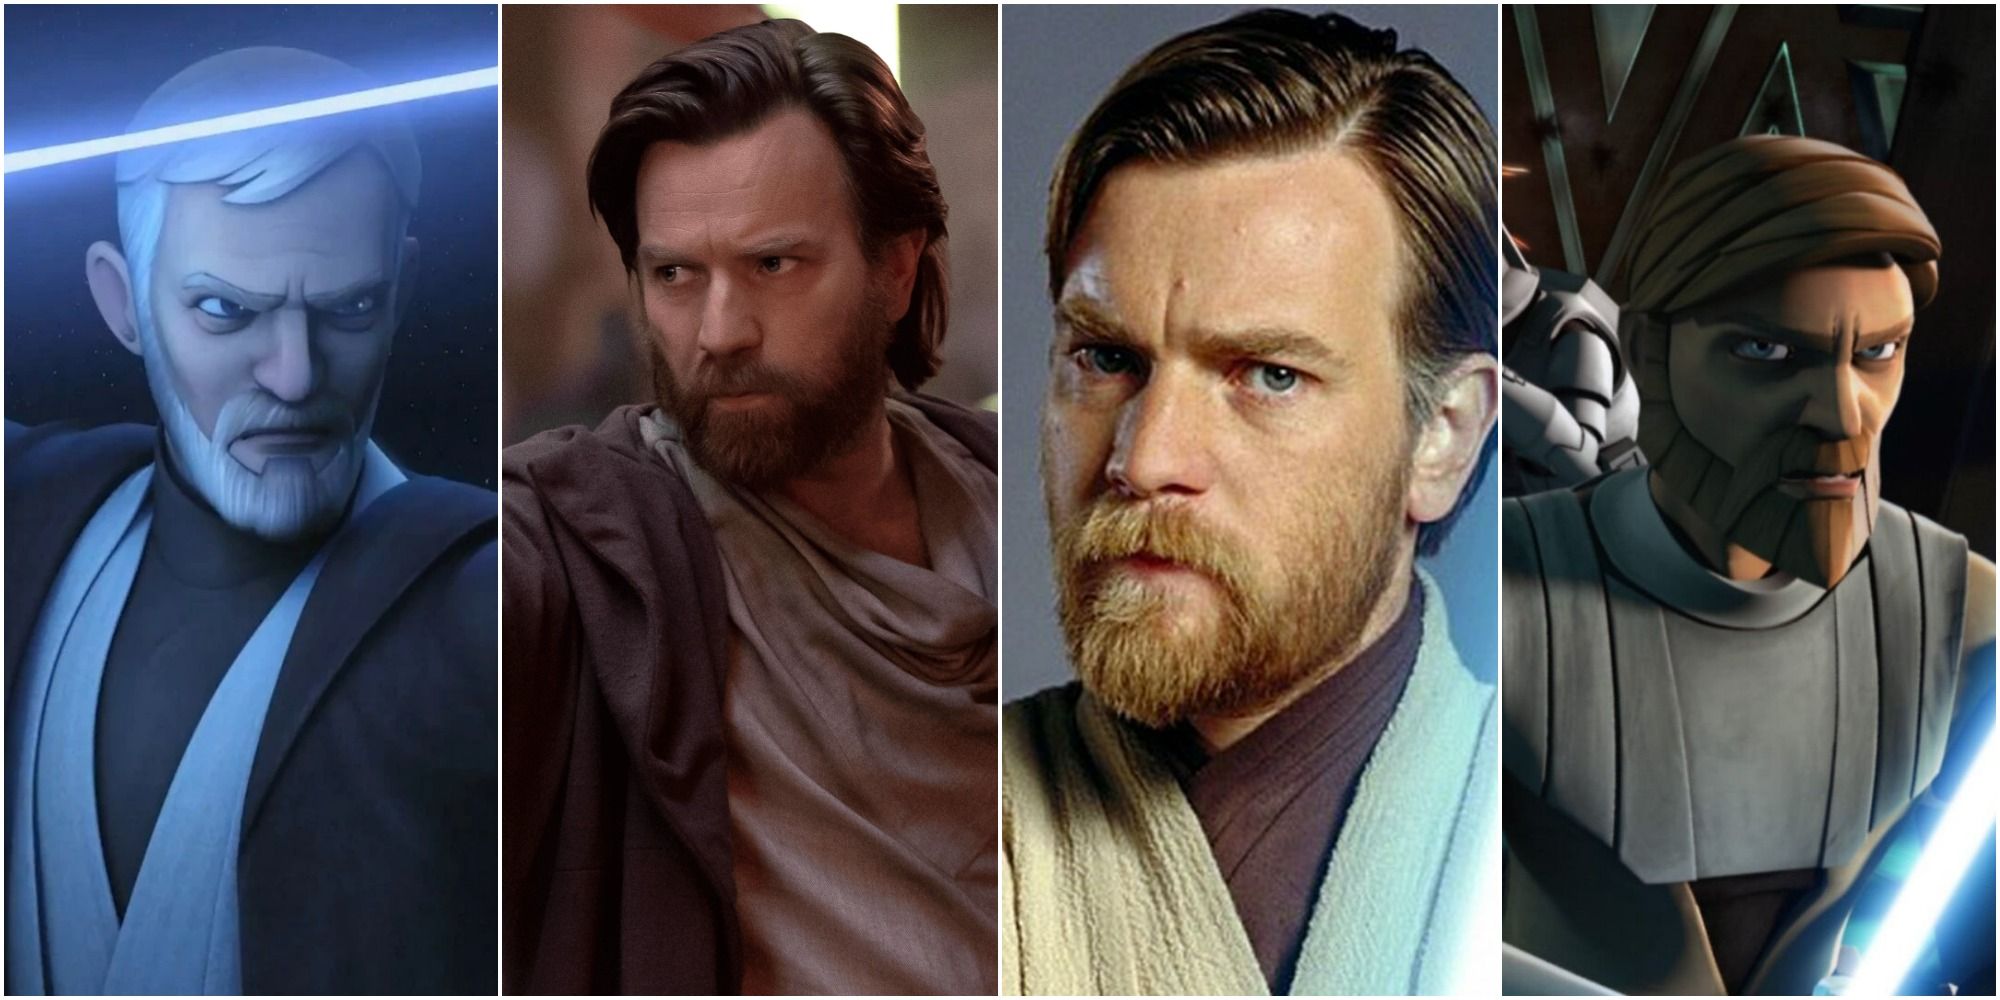 Four images of Obi-Wan Kenobi as he is seen in Rebel, Kenobi series, Revenge of the Sith, and The Clone Wars